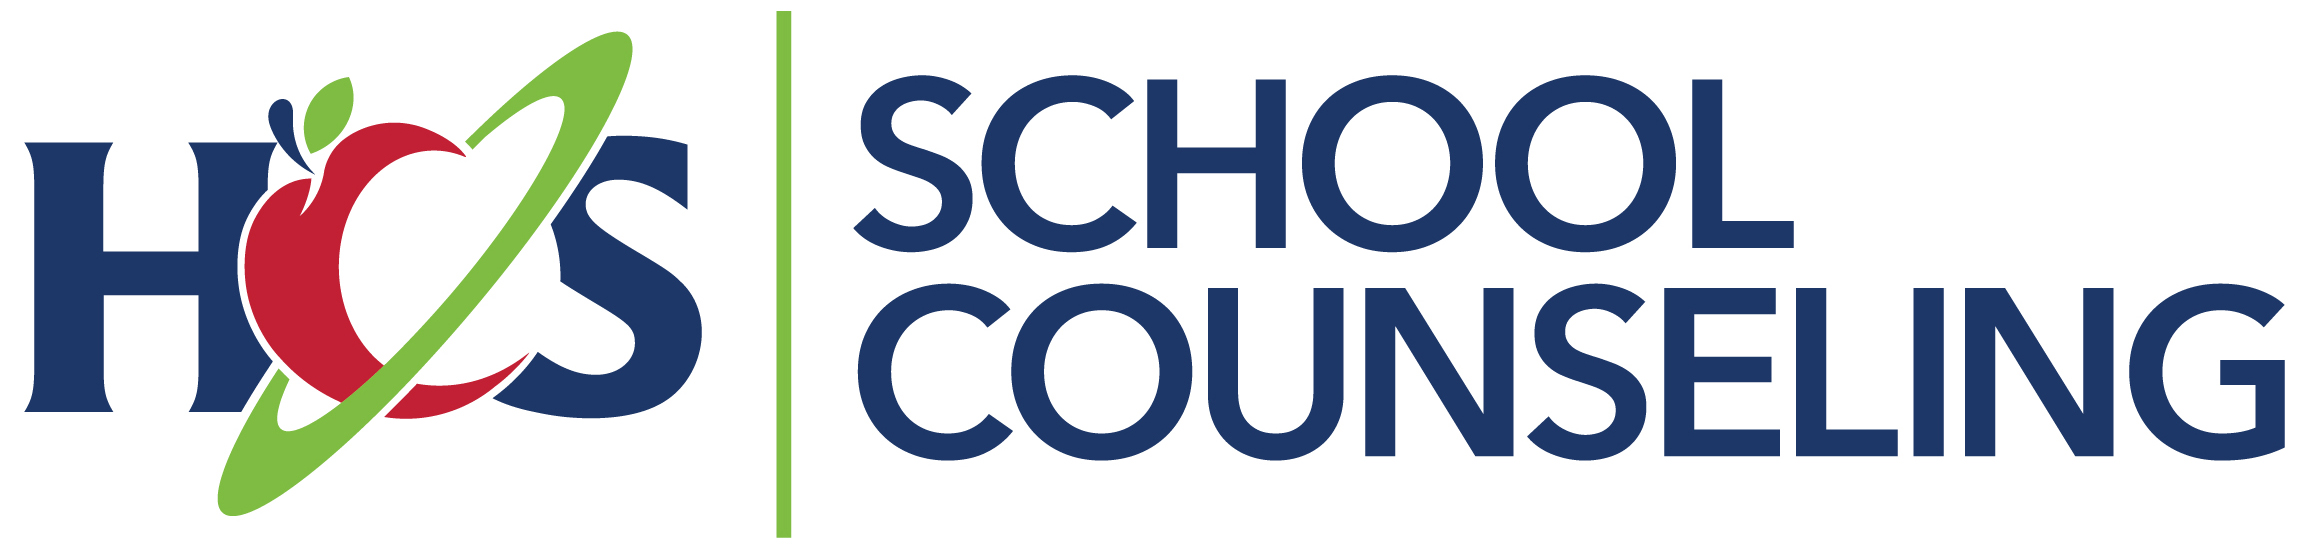 huntsville city schools logo